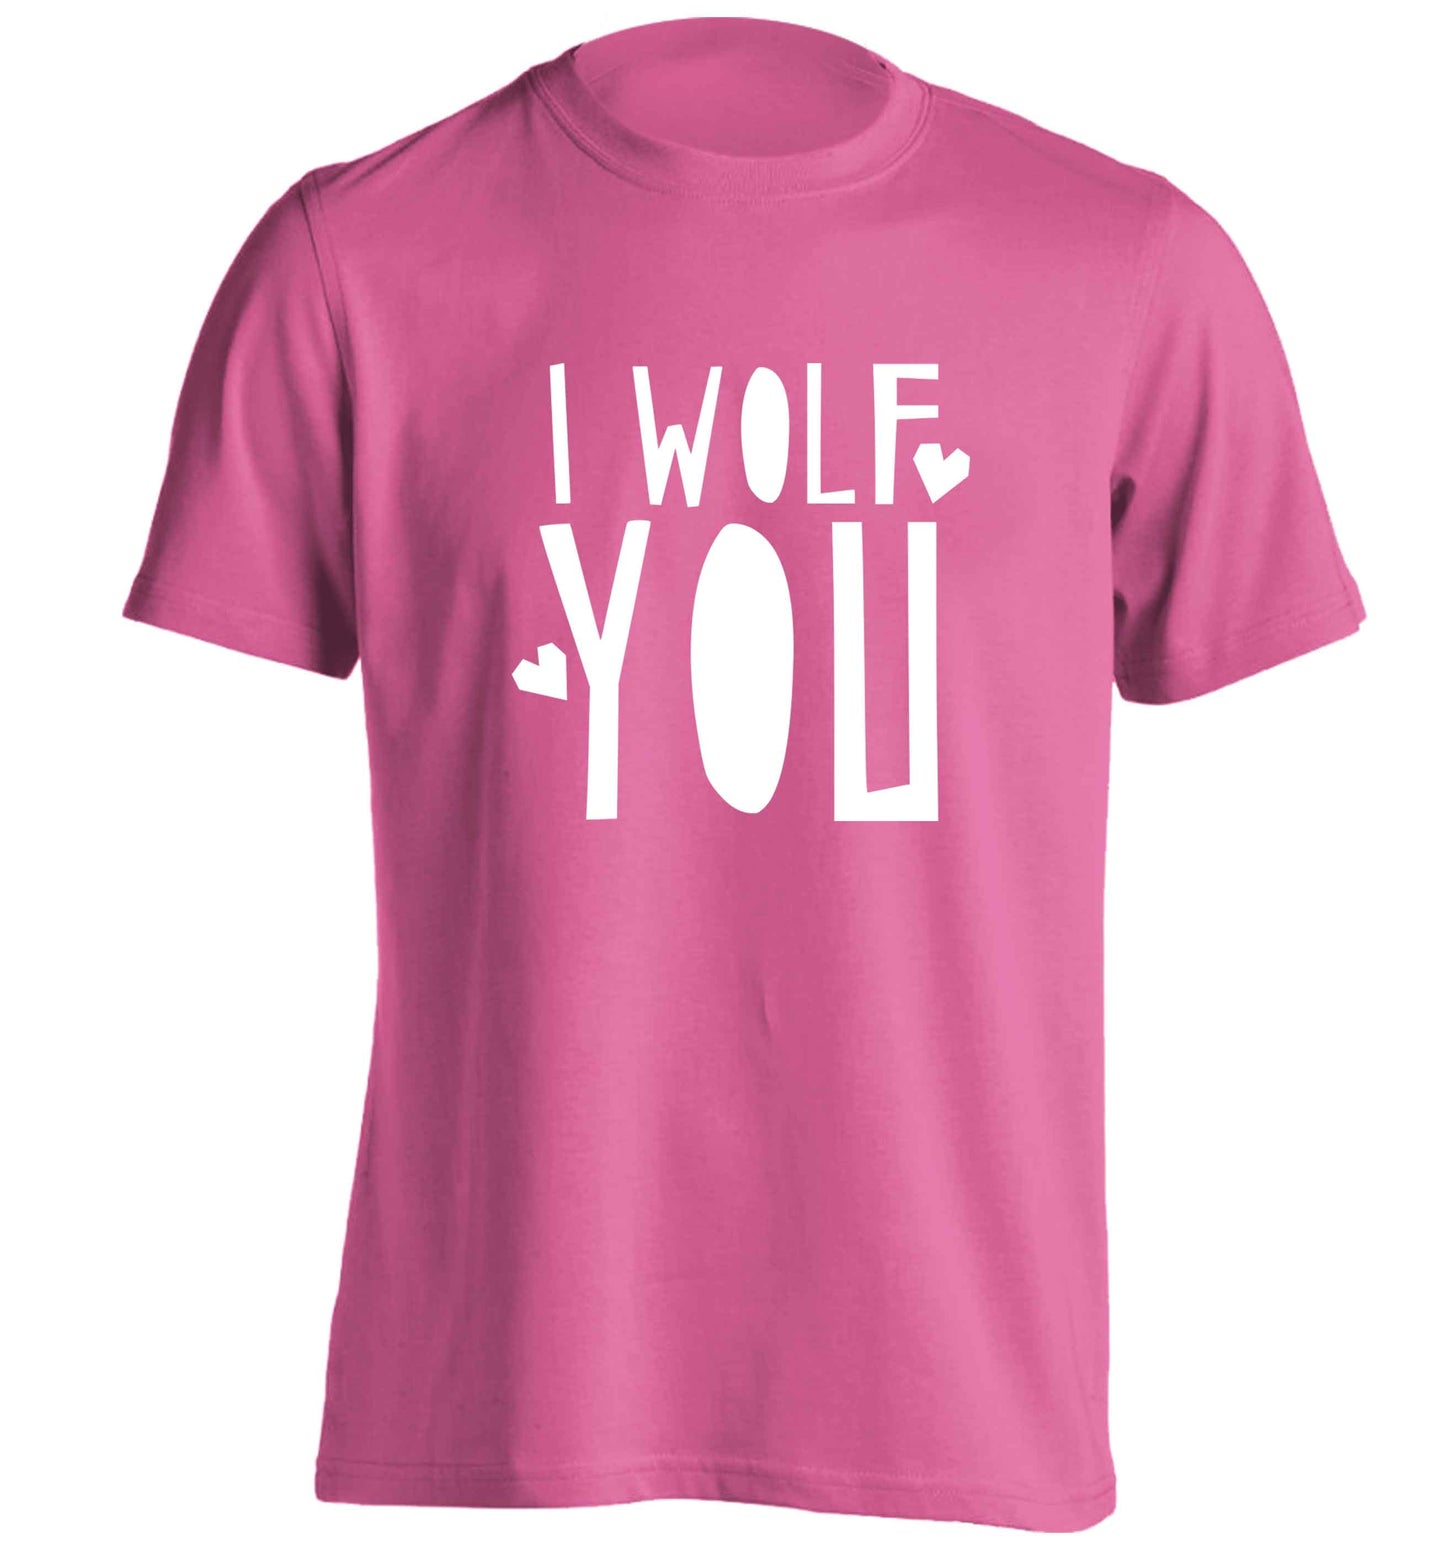 I wolf you adults unisex pink Tshirt 2XL